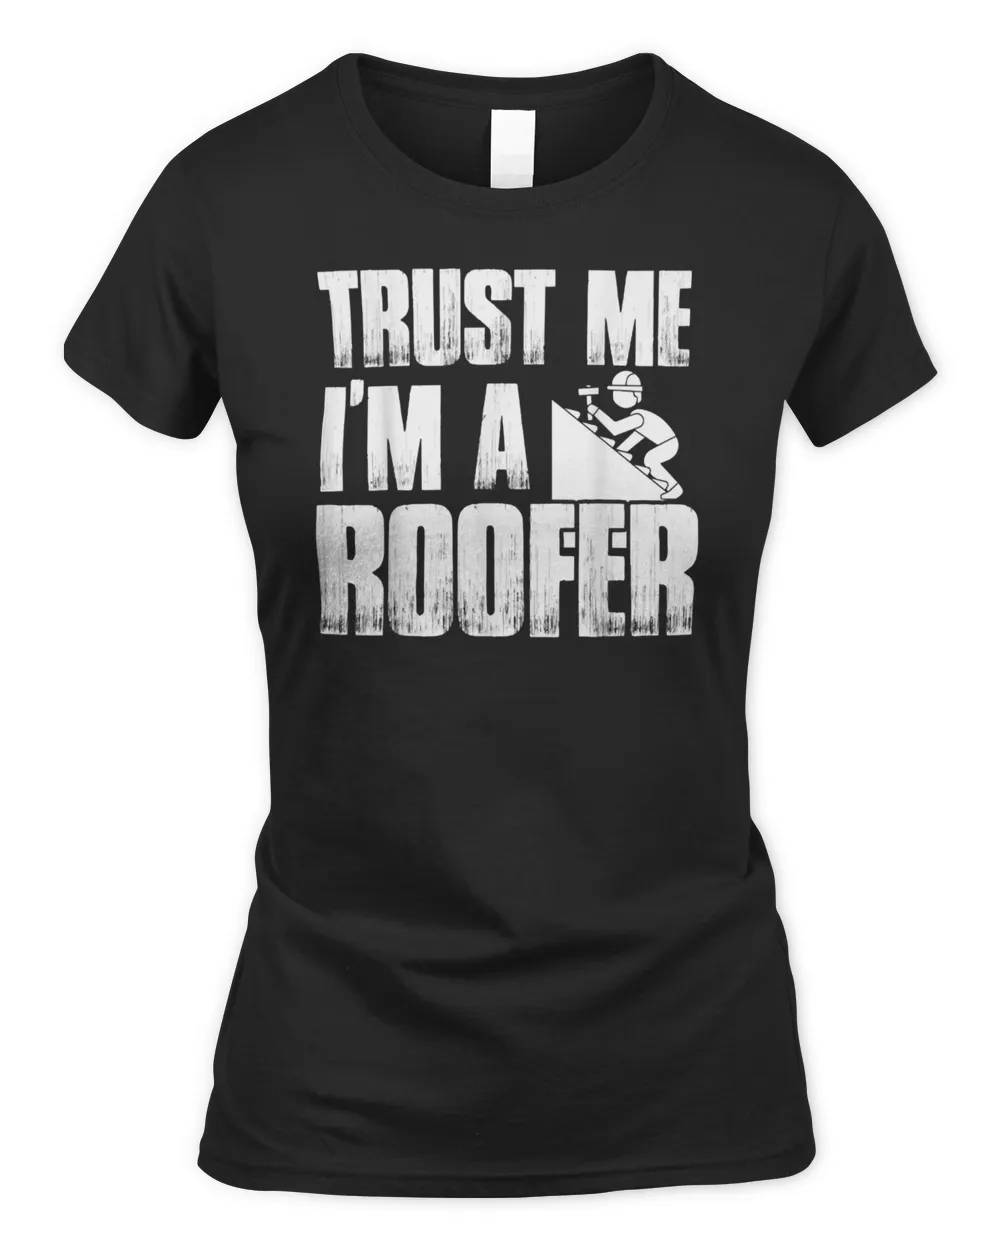 Roofer & Construction Honest Working American Trust Me T-Shirt